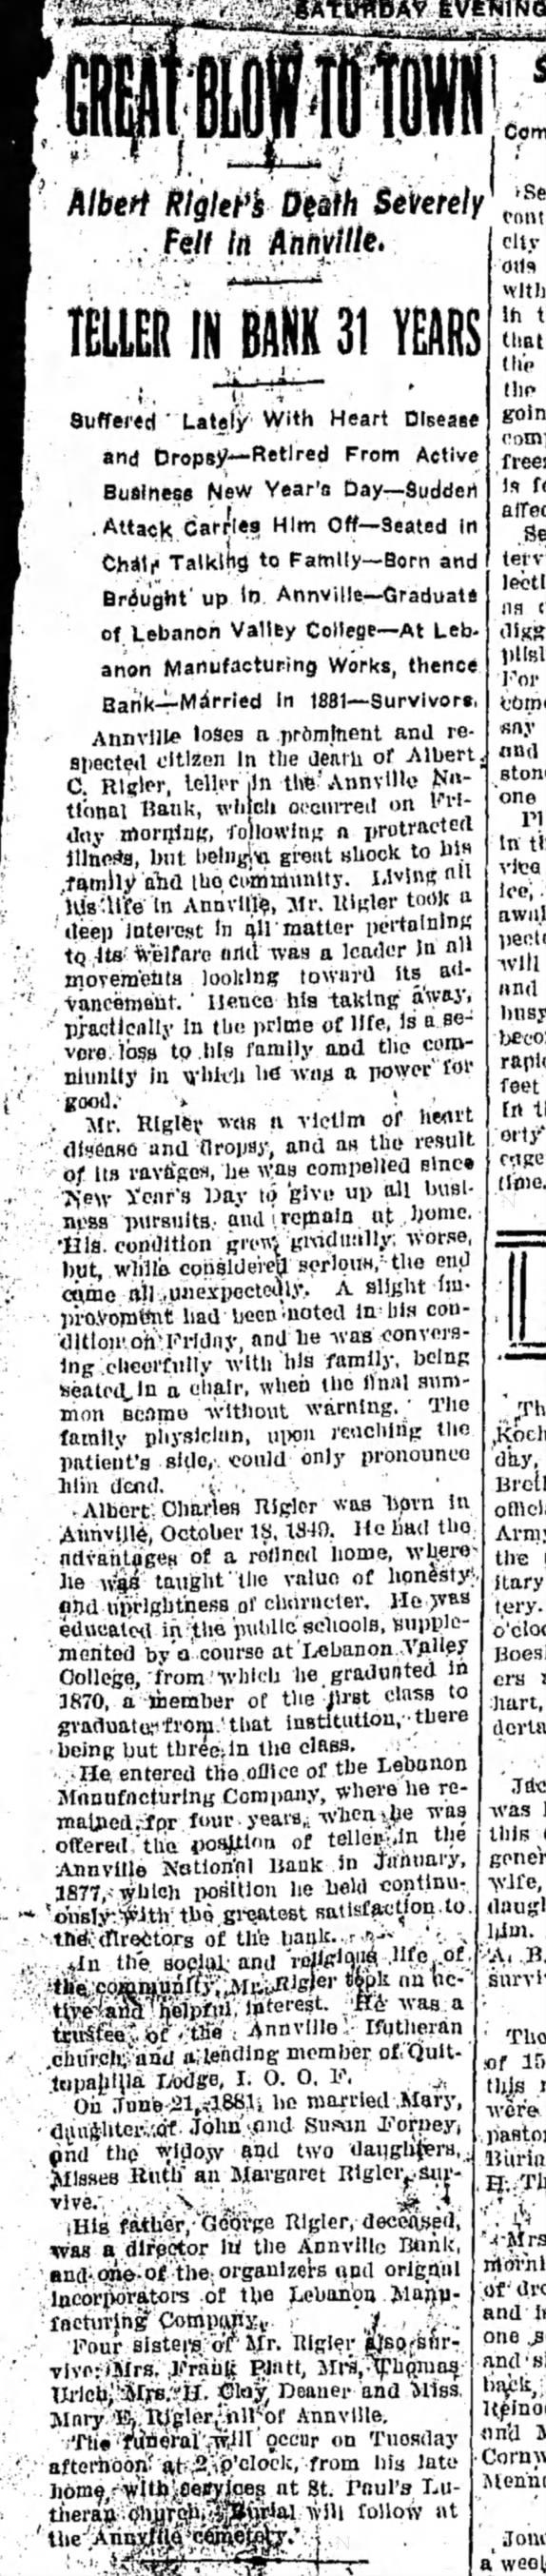 1904 February 27 Death of Albert Rigler (one of first LVC grads)